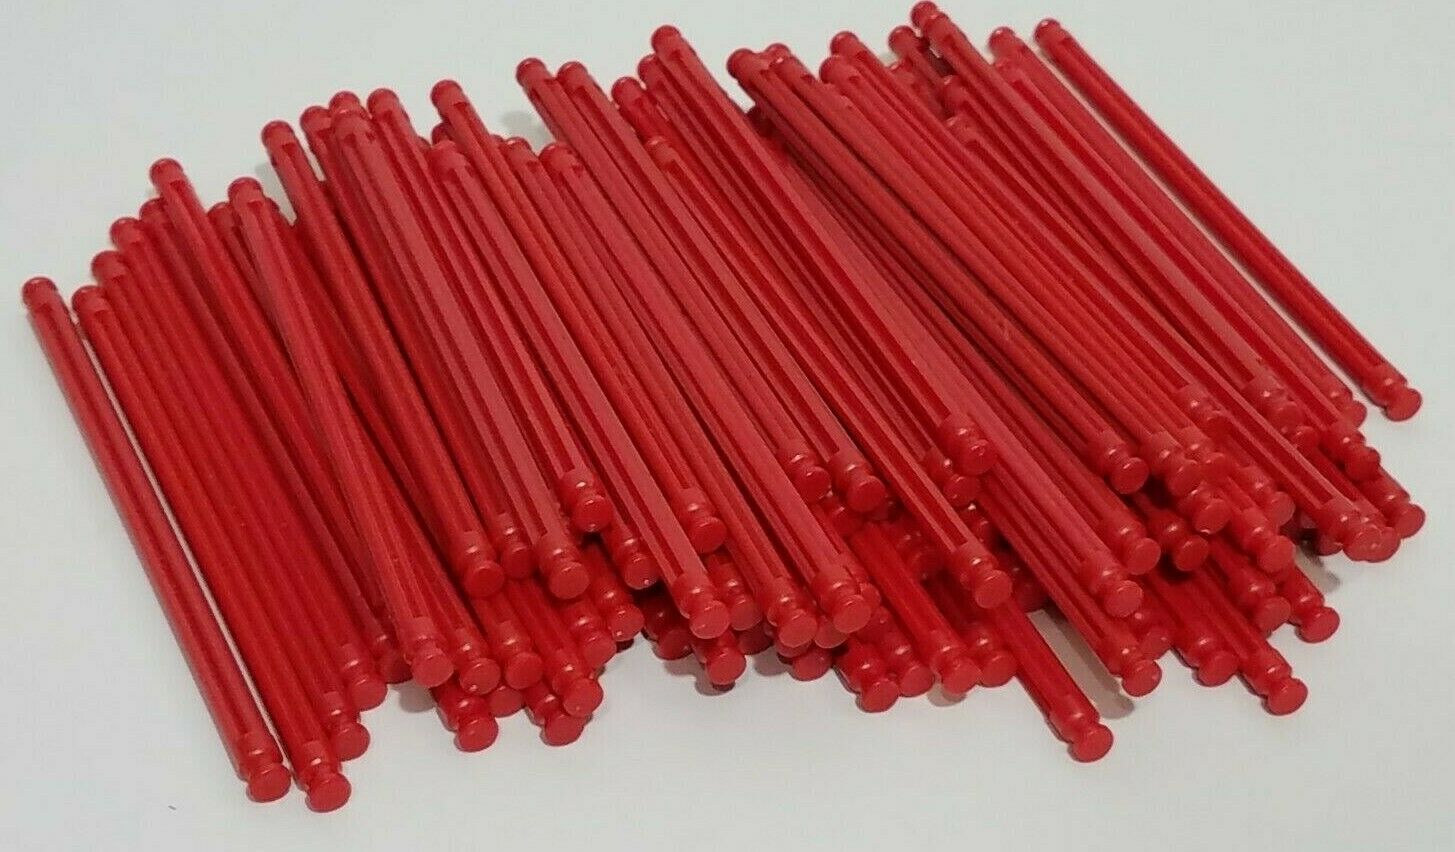 100 Knex Red Rods 5-1/8" Bulk Standard Lot Replacement Parts Pieces K'nex